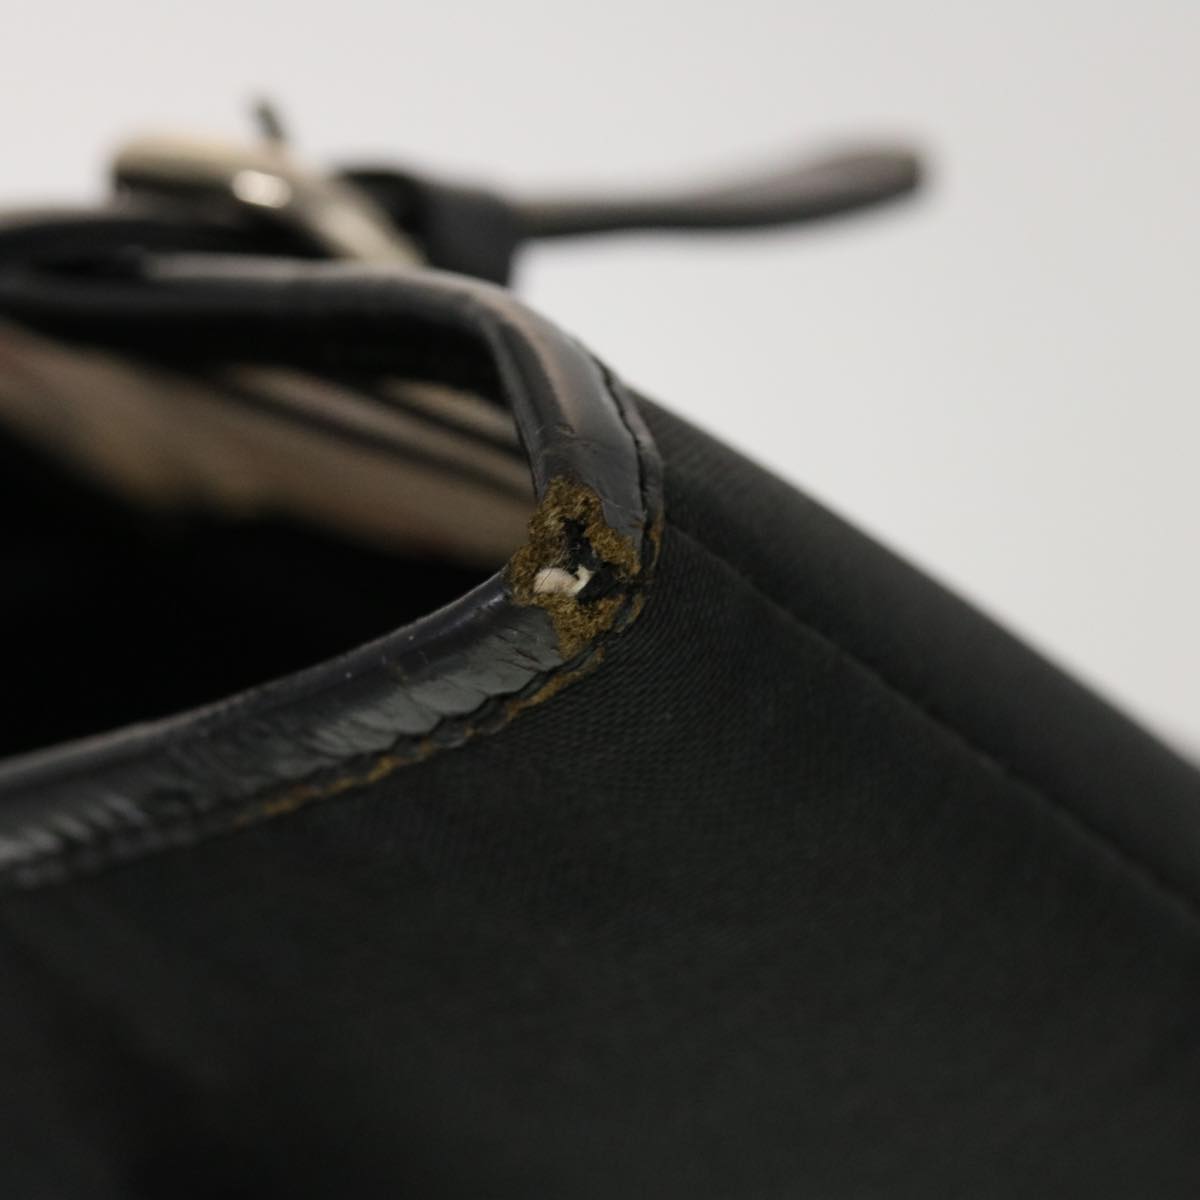 Burberrys Shoulder Bag Nylon Black Auth bs5710